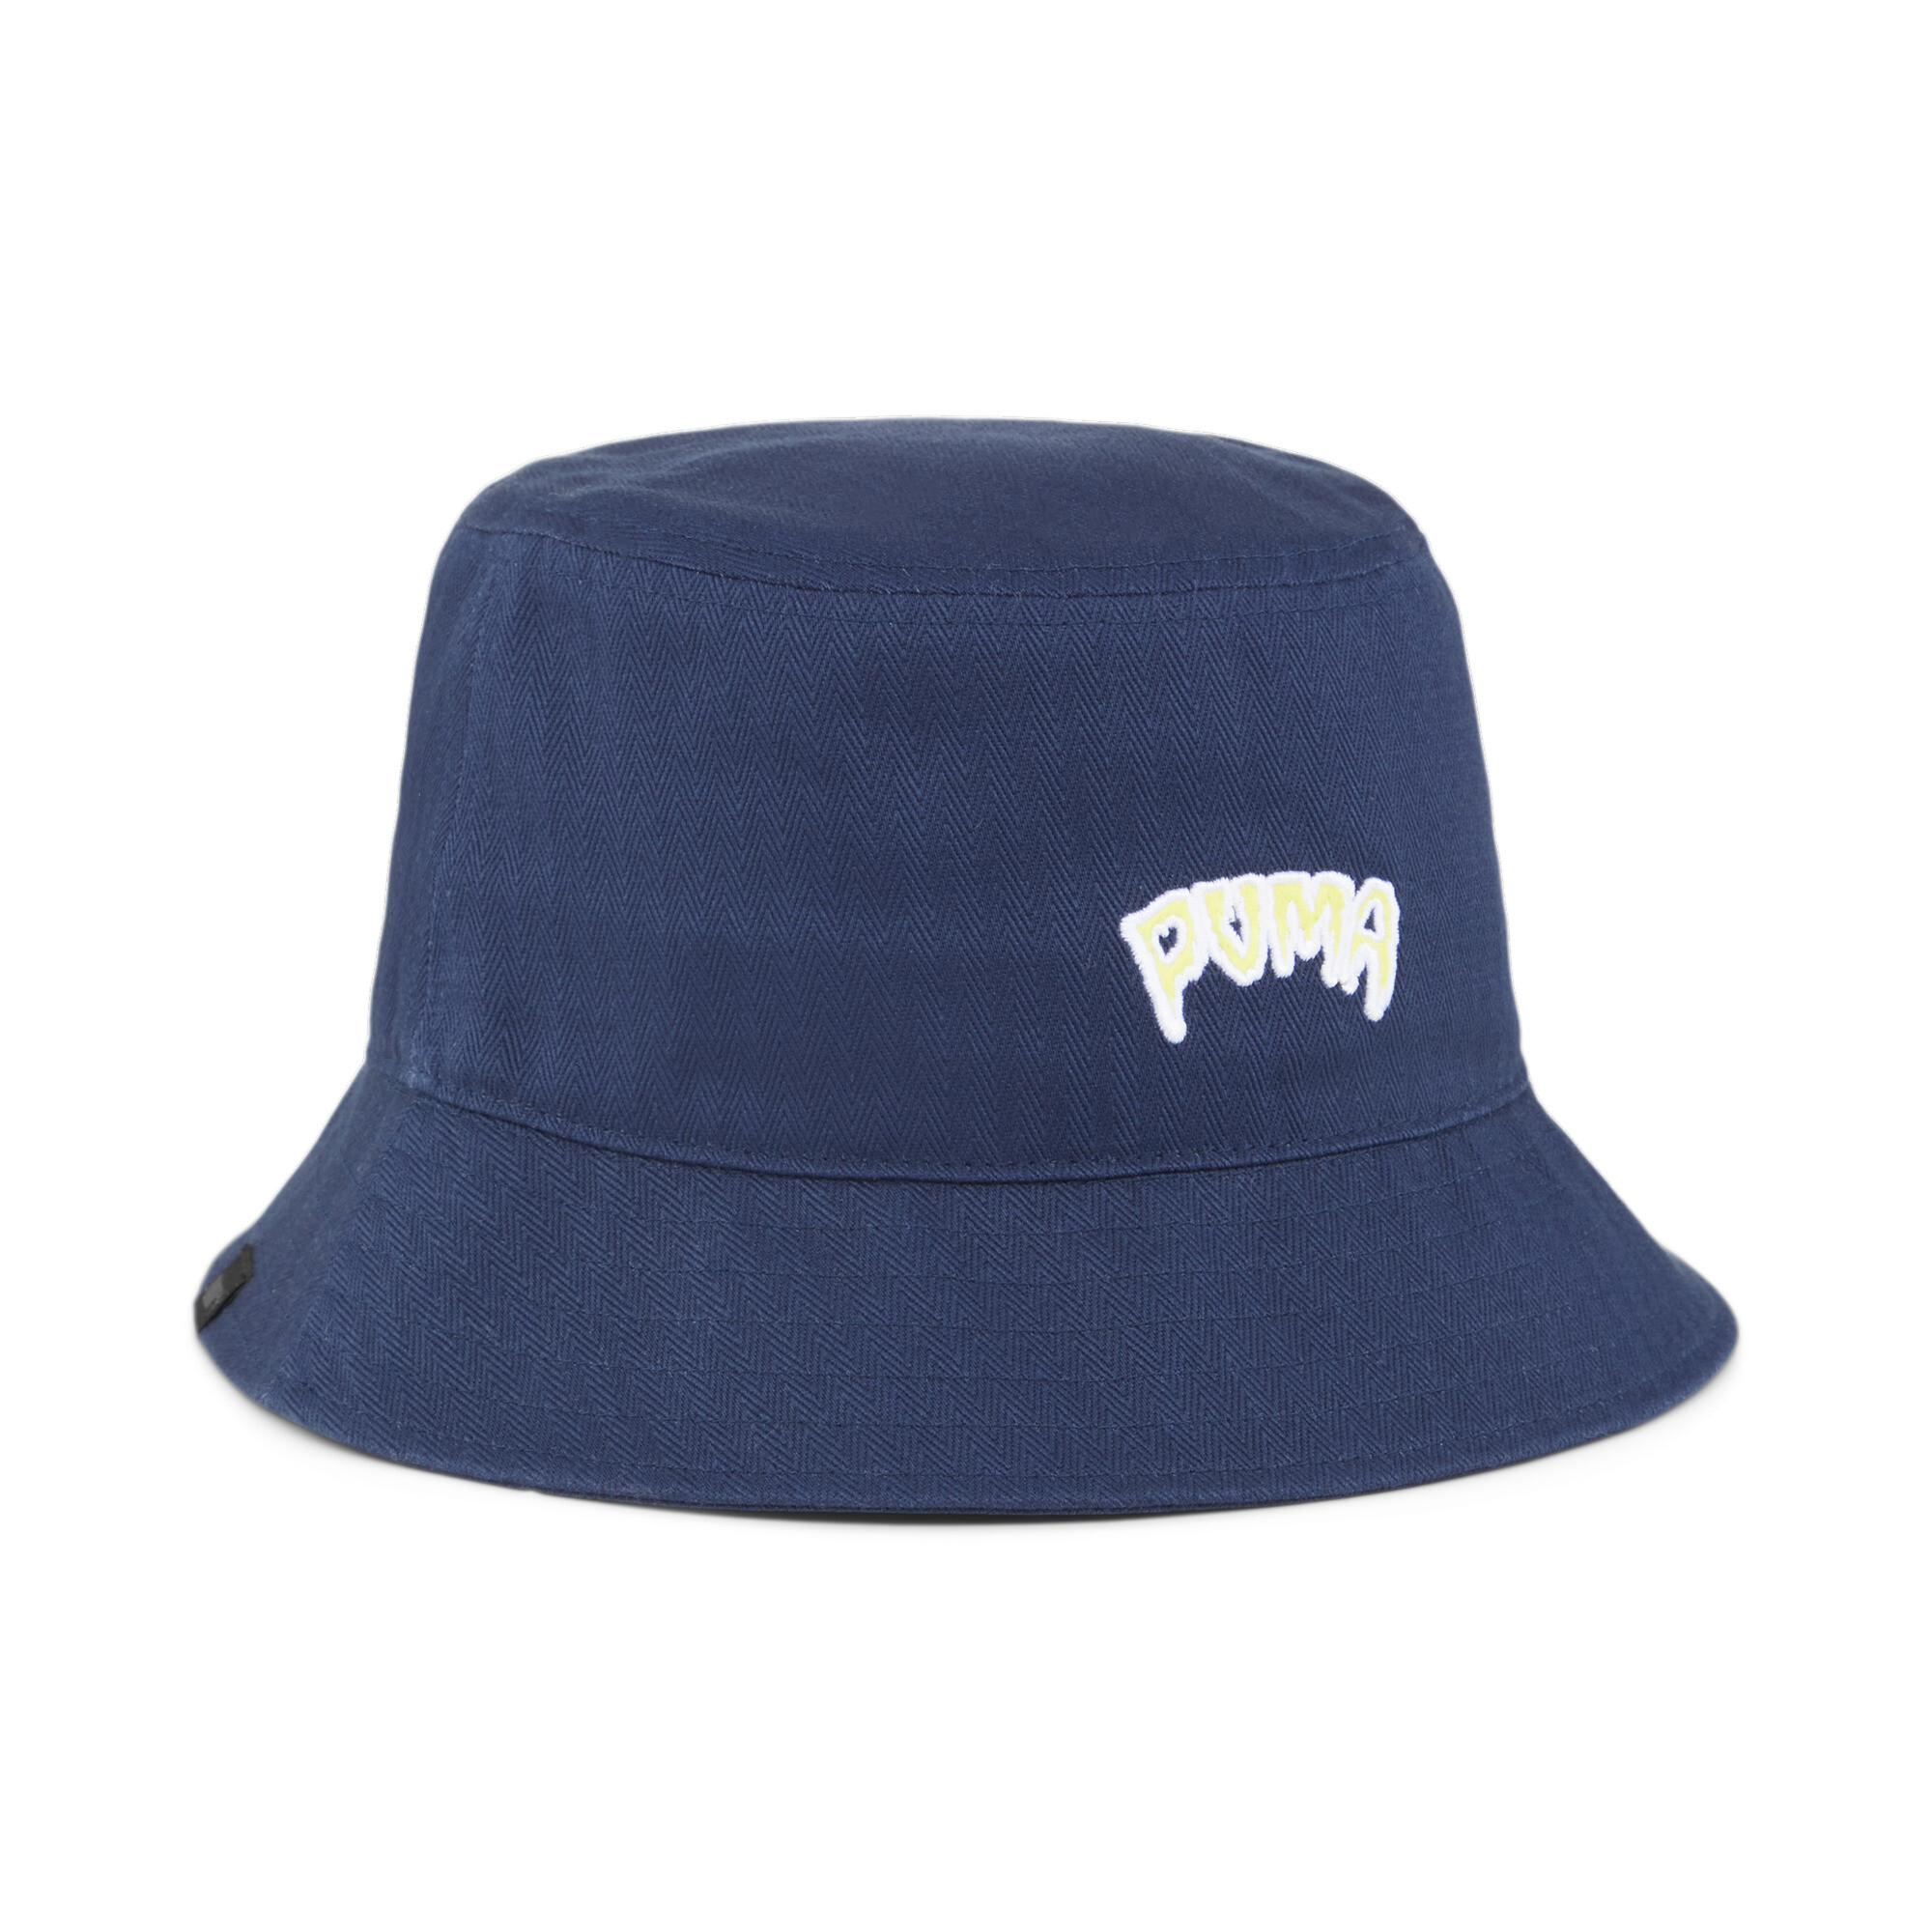 Women's Puma Skate Bucket Hat, Blue, Size S/M, Accessories